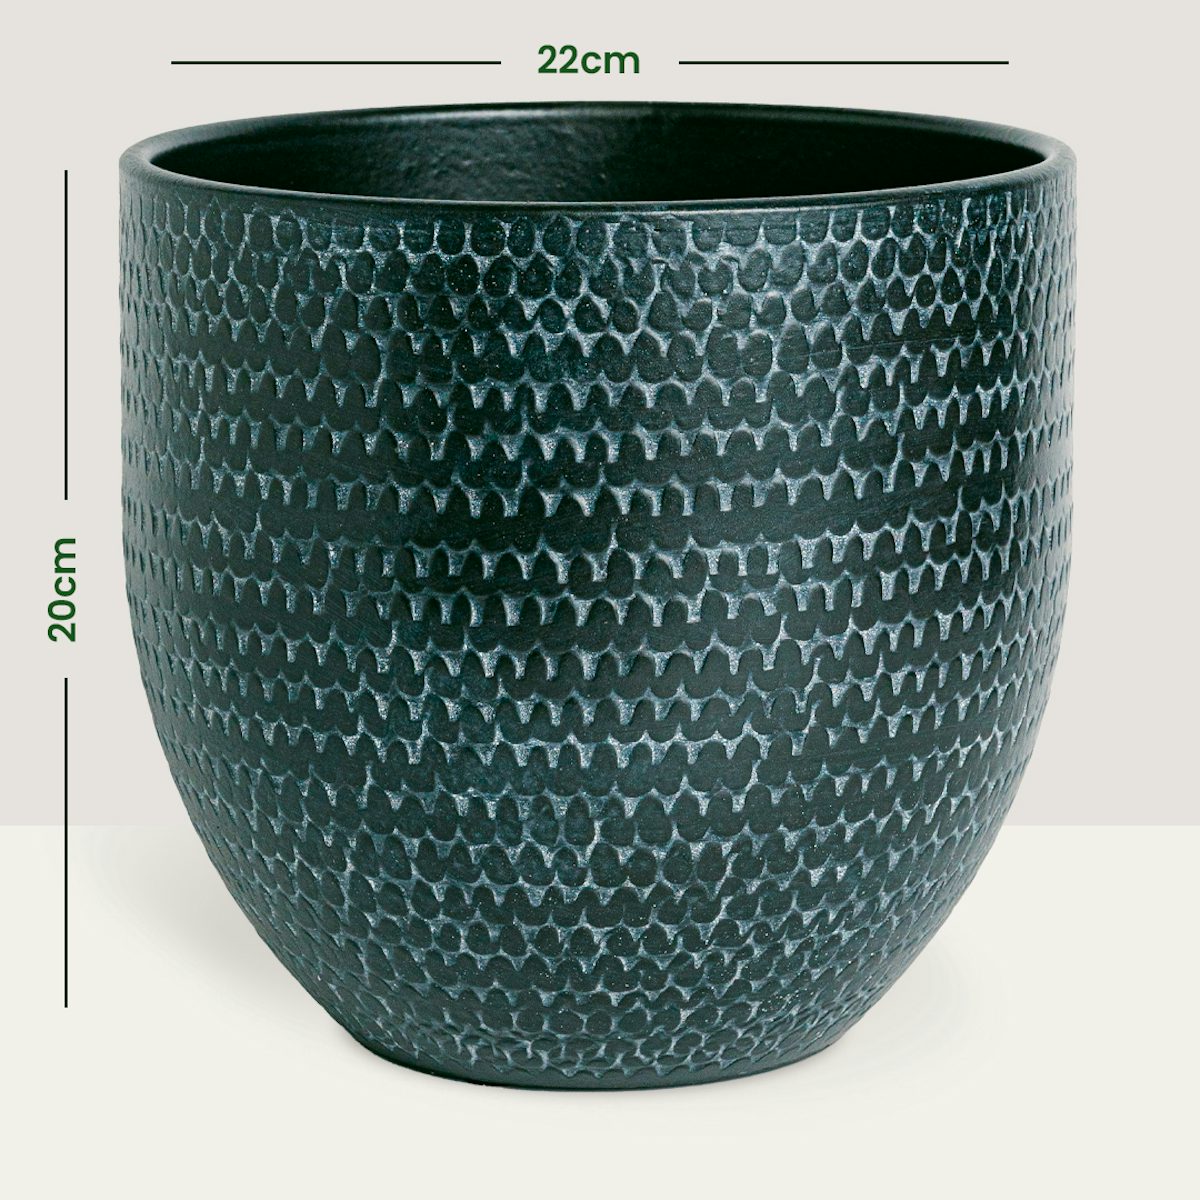 Tokyo Pot - XL/22cm